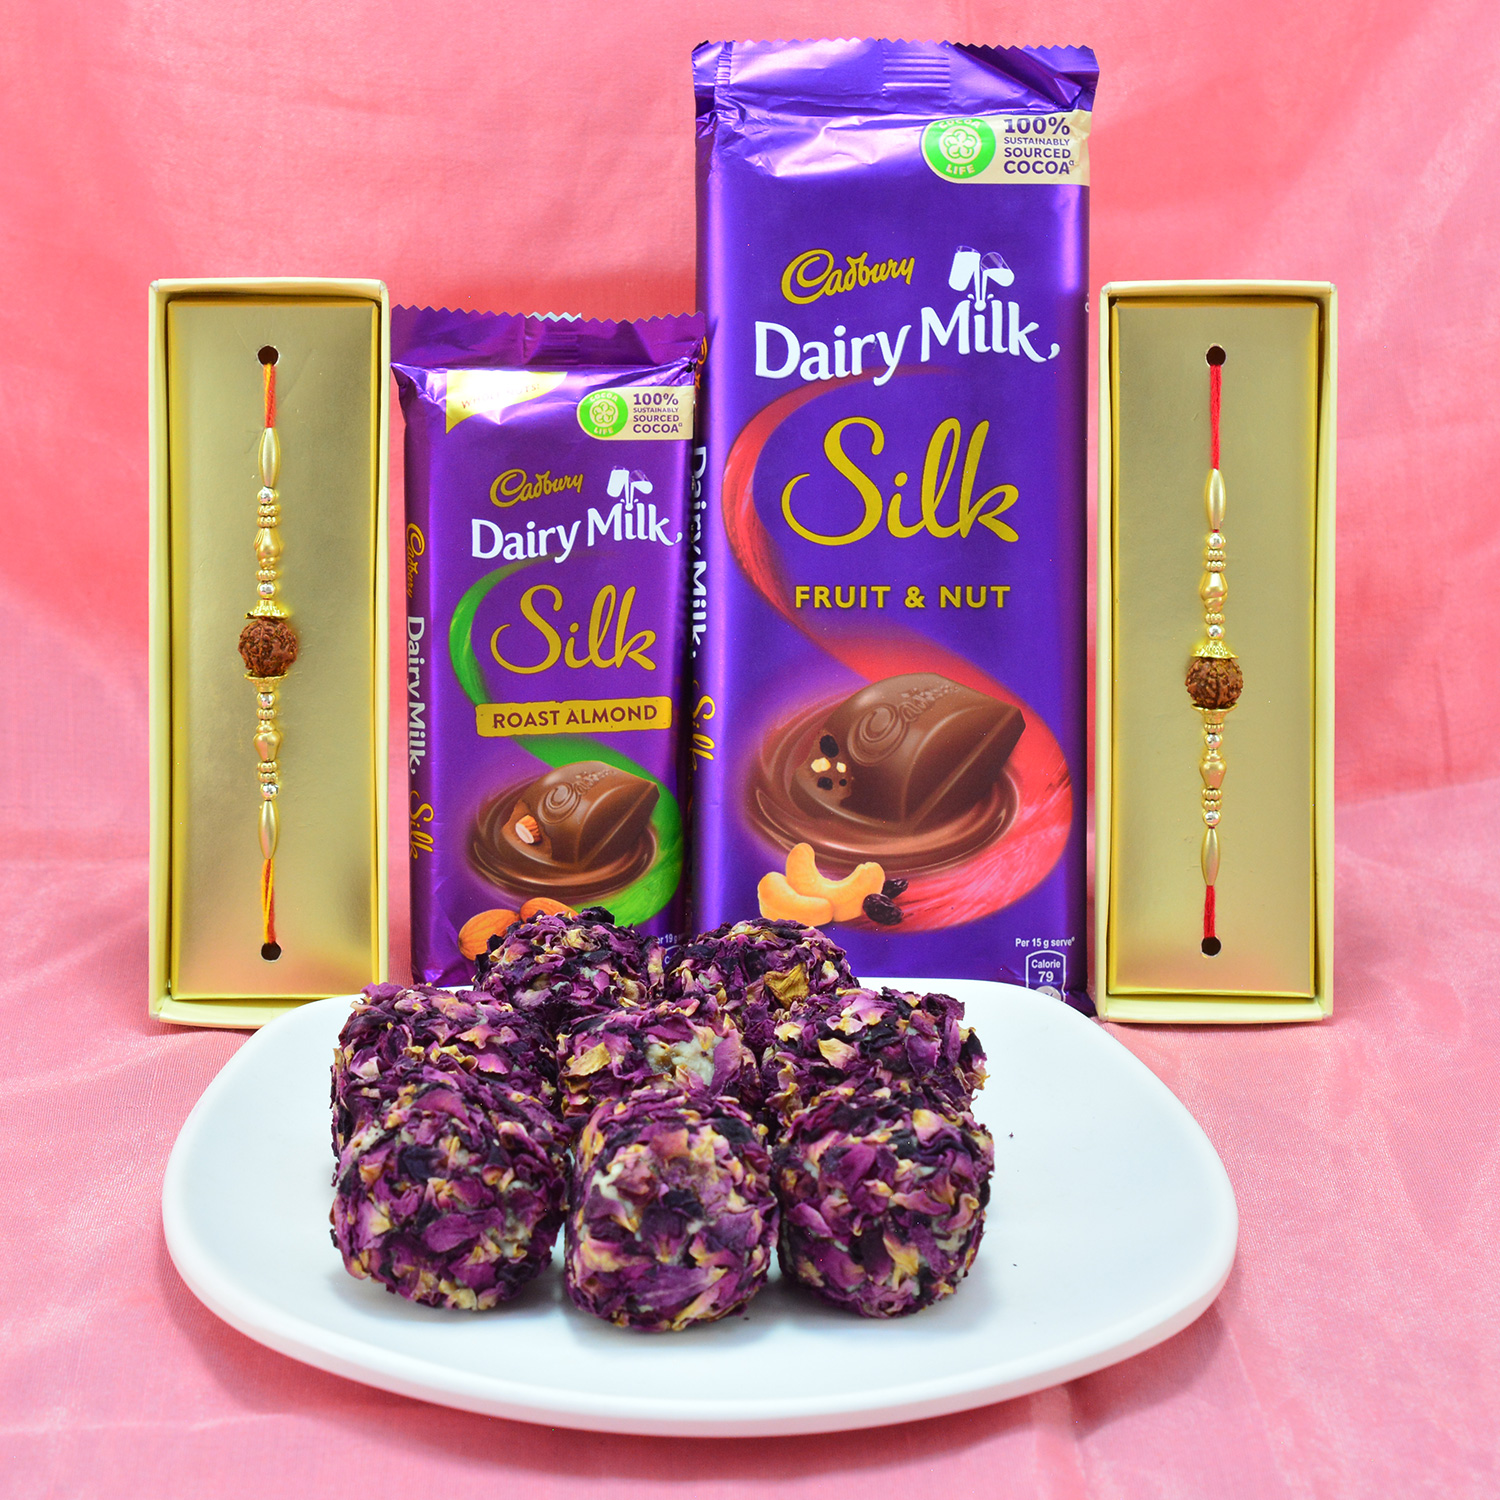 Delightful Cadbury Dairy Milk Silk with delicious Kaju Rose Laddu along with Magnificent Rudraksha Rakhi